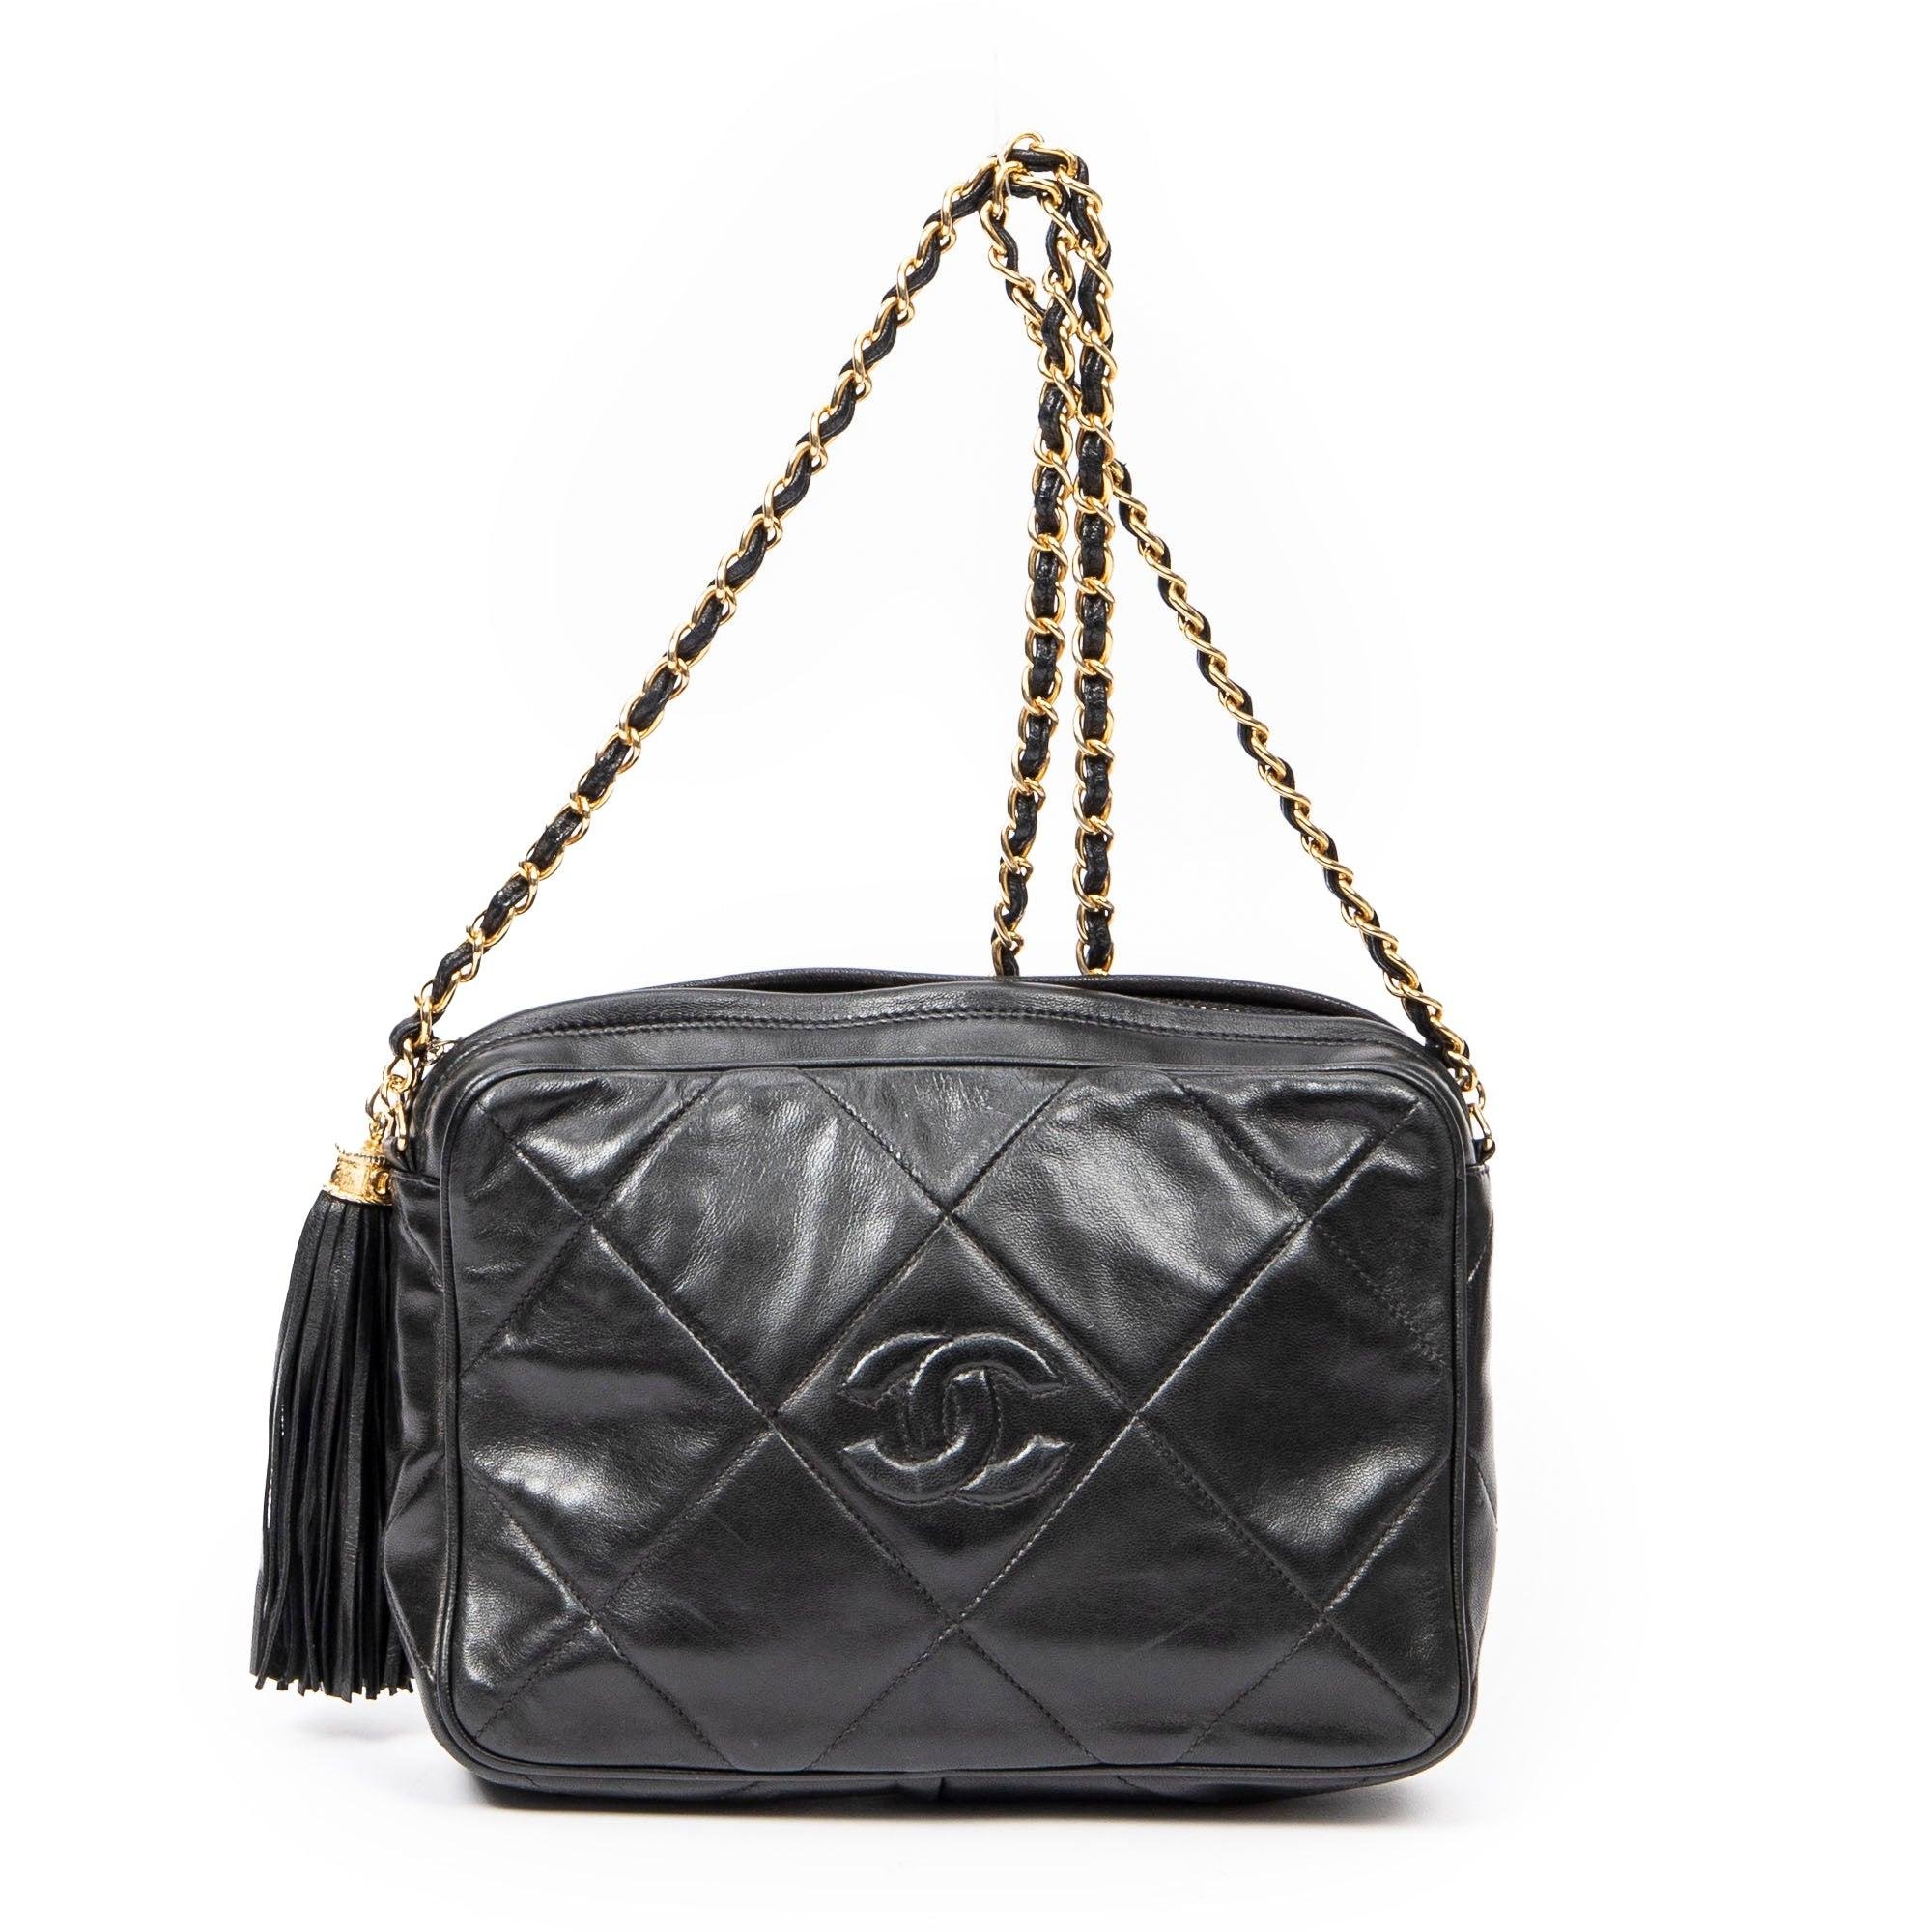 AUTHENTIC CHANEL Mini Camera Tassel Bag with Bijoux Chain, Luxury